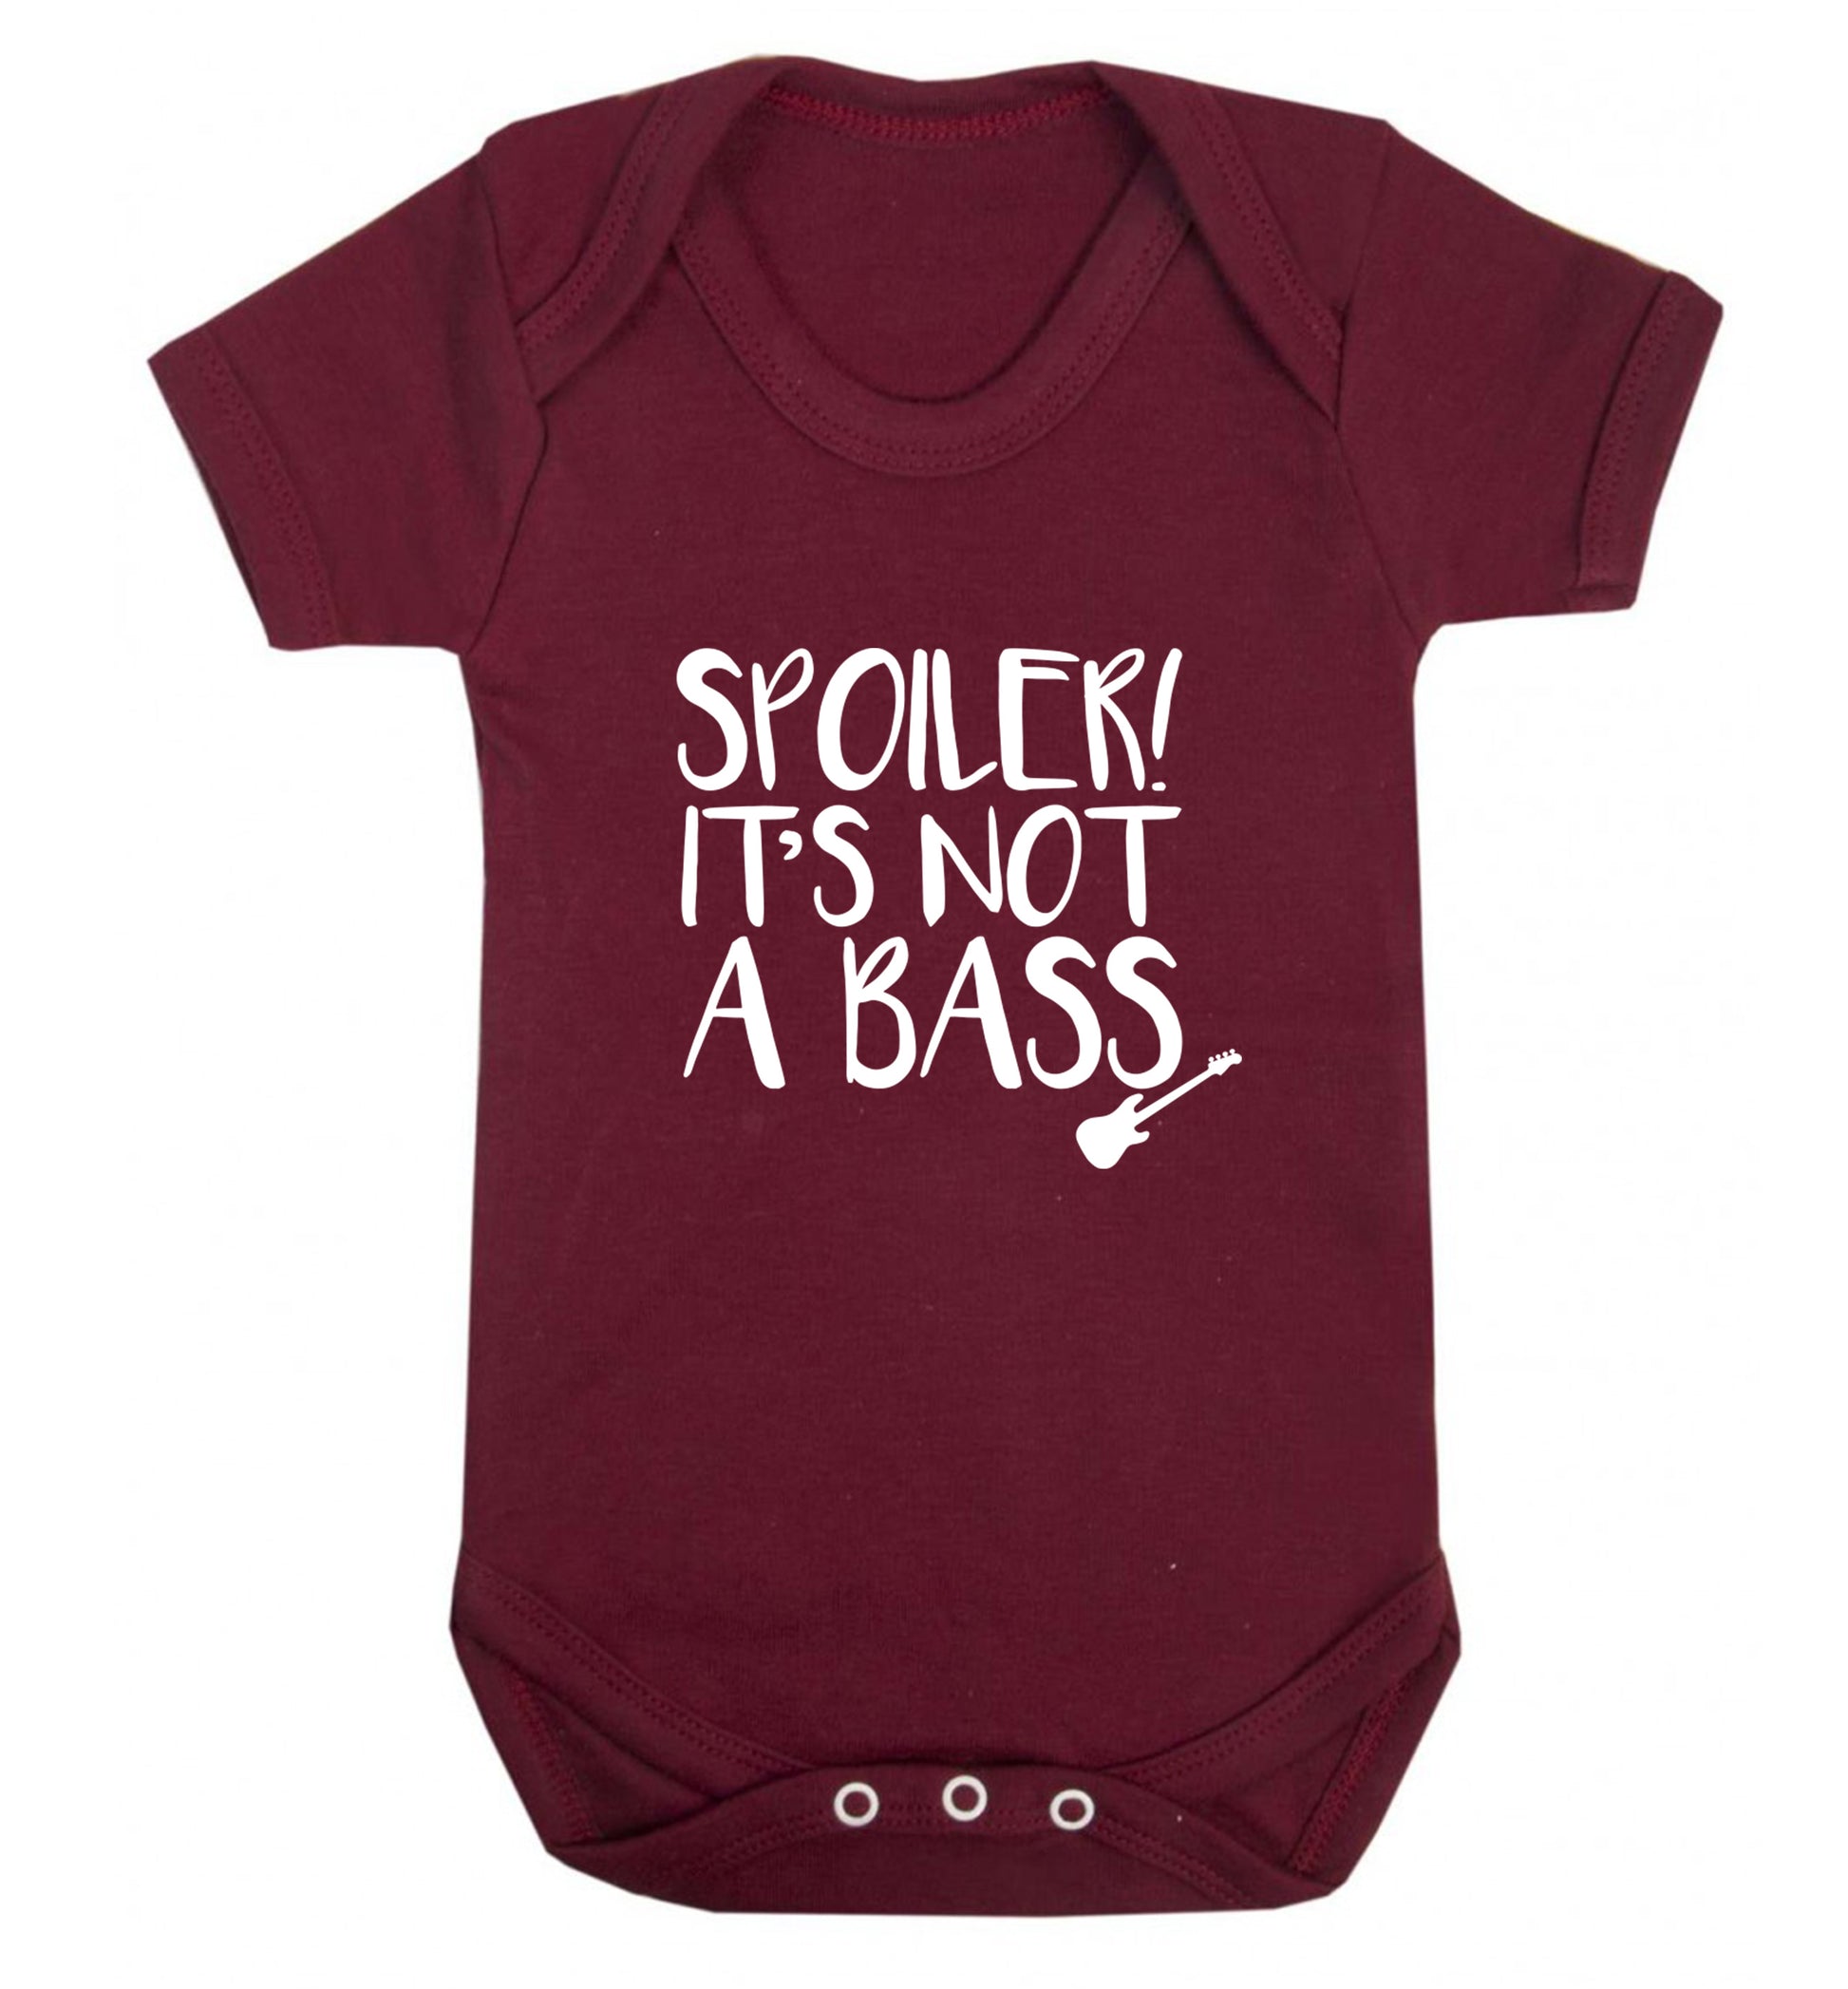 Spoiler it's not a bass Baby Vest maroon 18-24 months